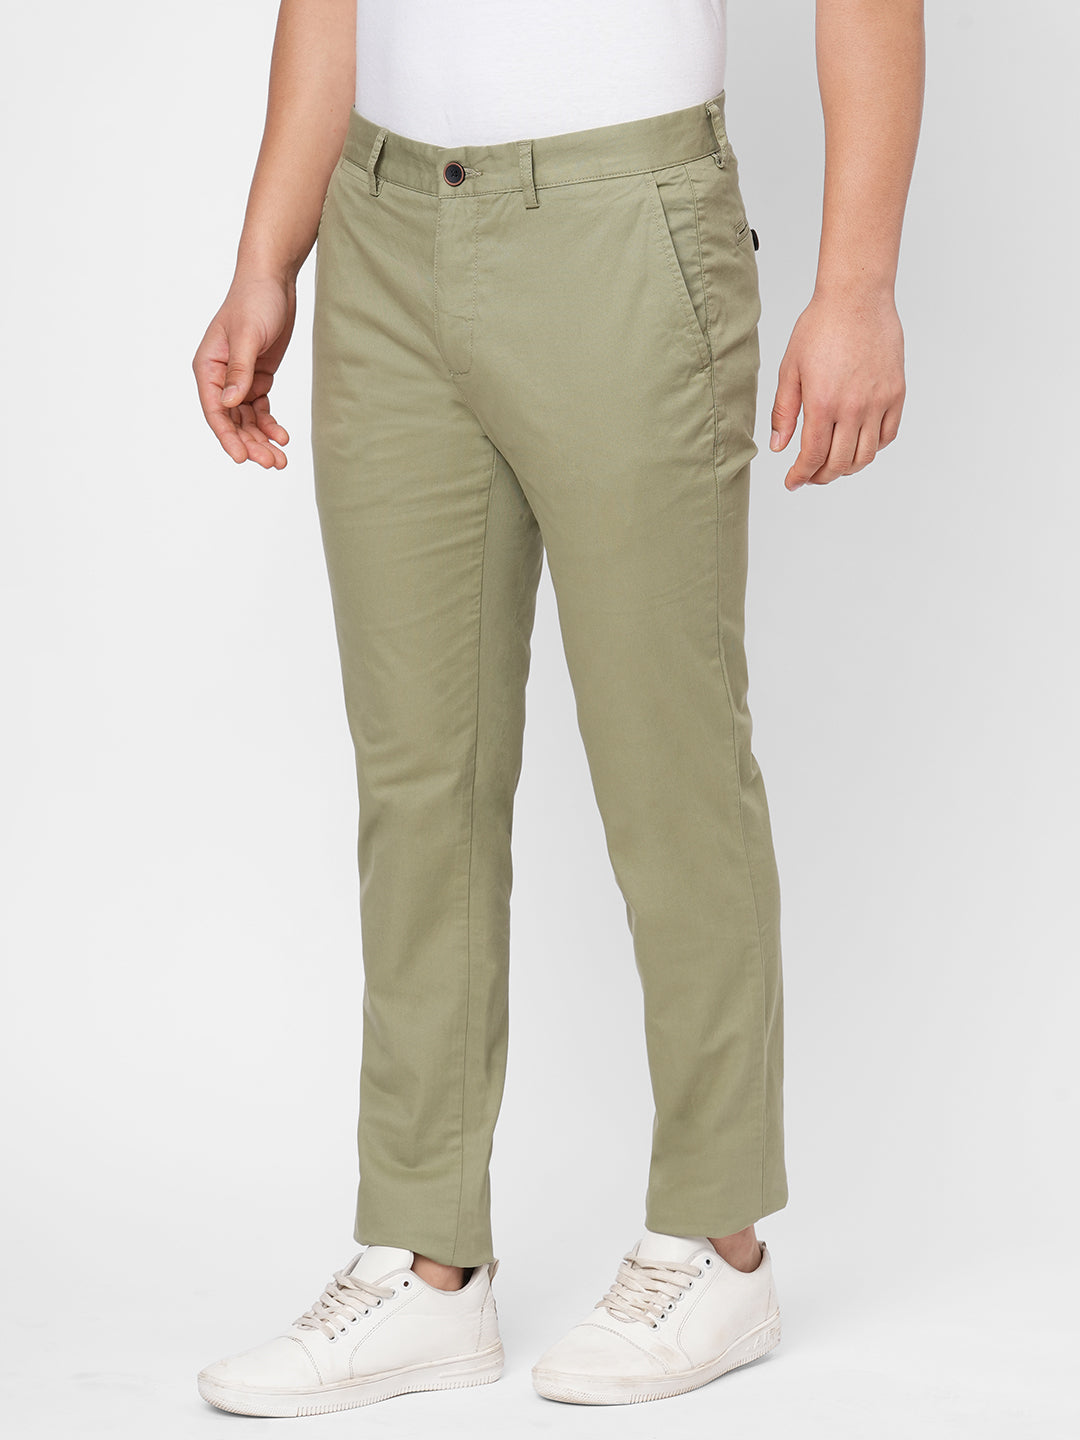 Buy Leva Women's Slim Fit Casual Trousers (Black_40) at Amazon.in